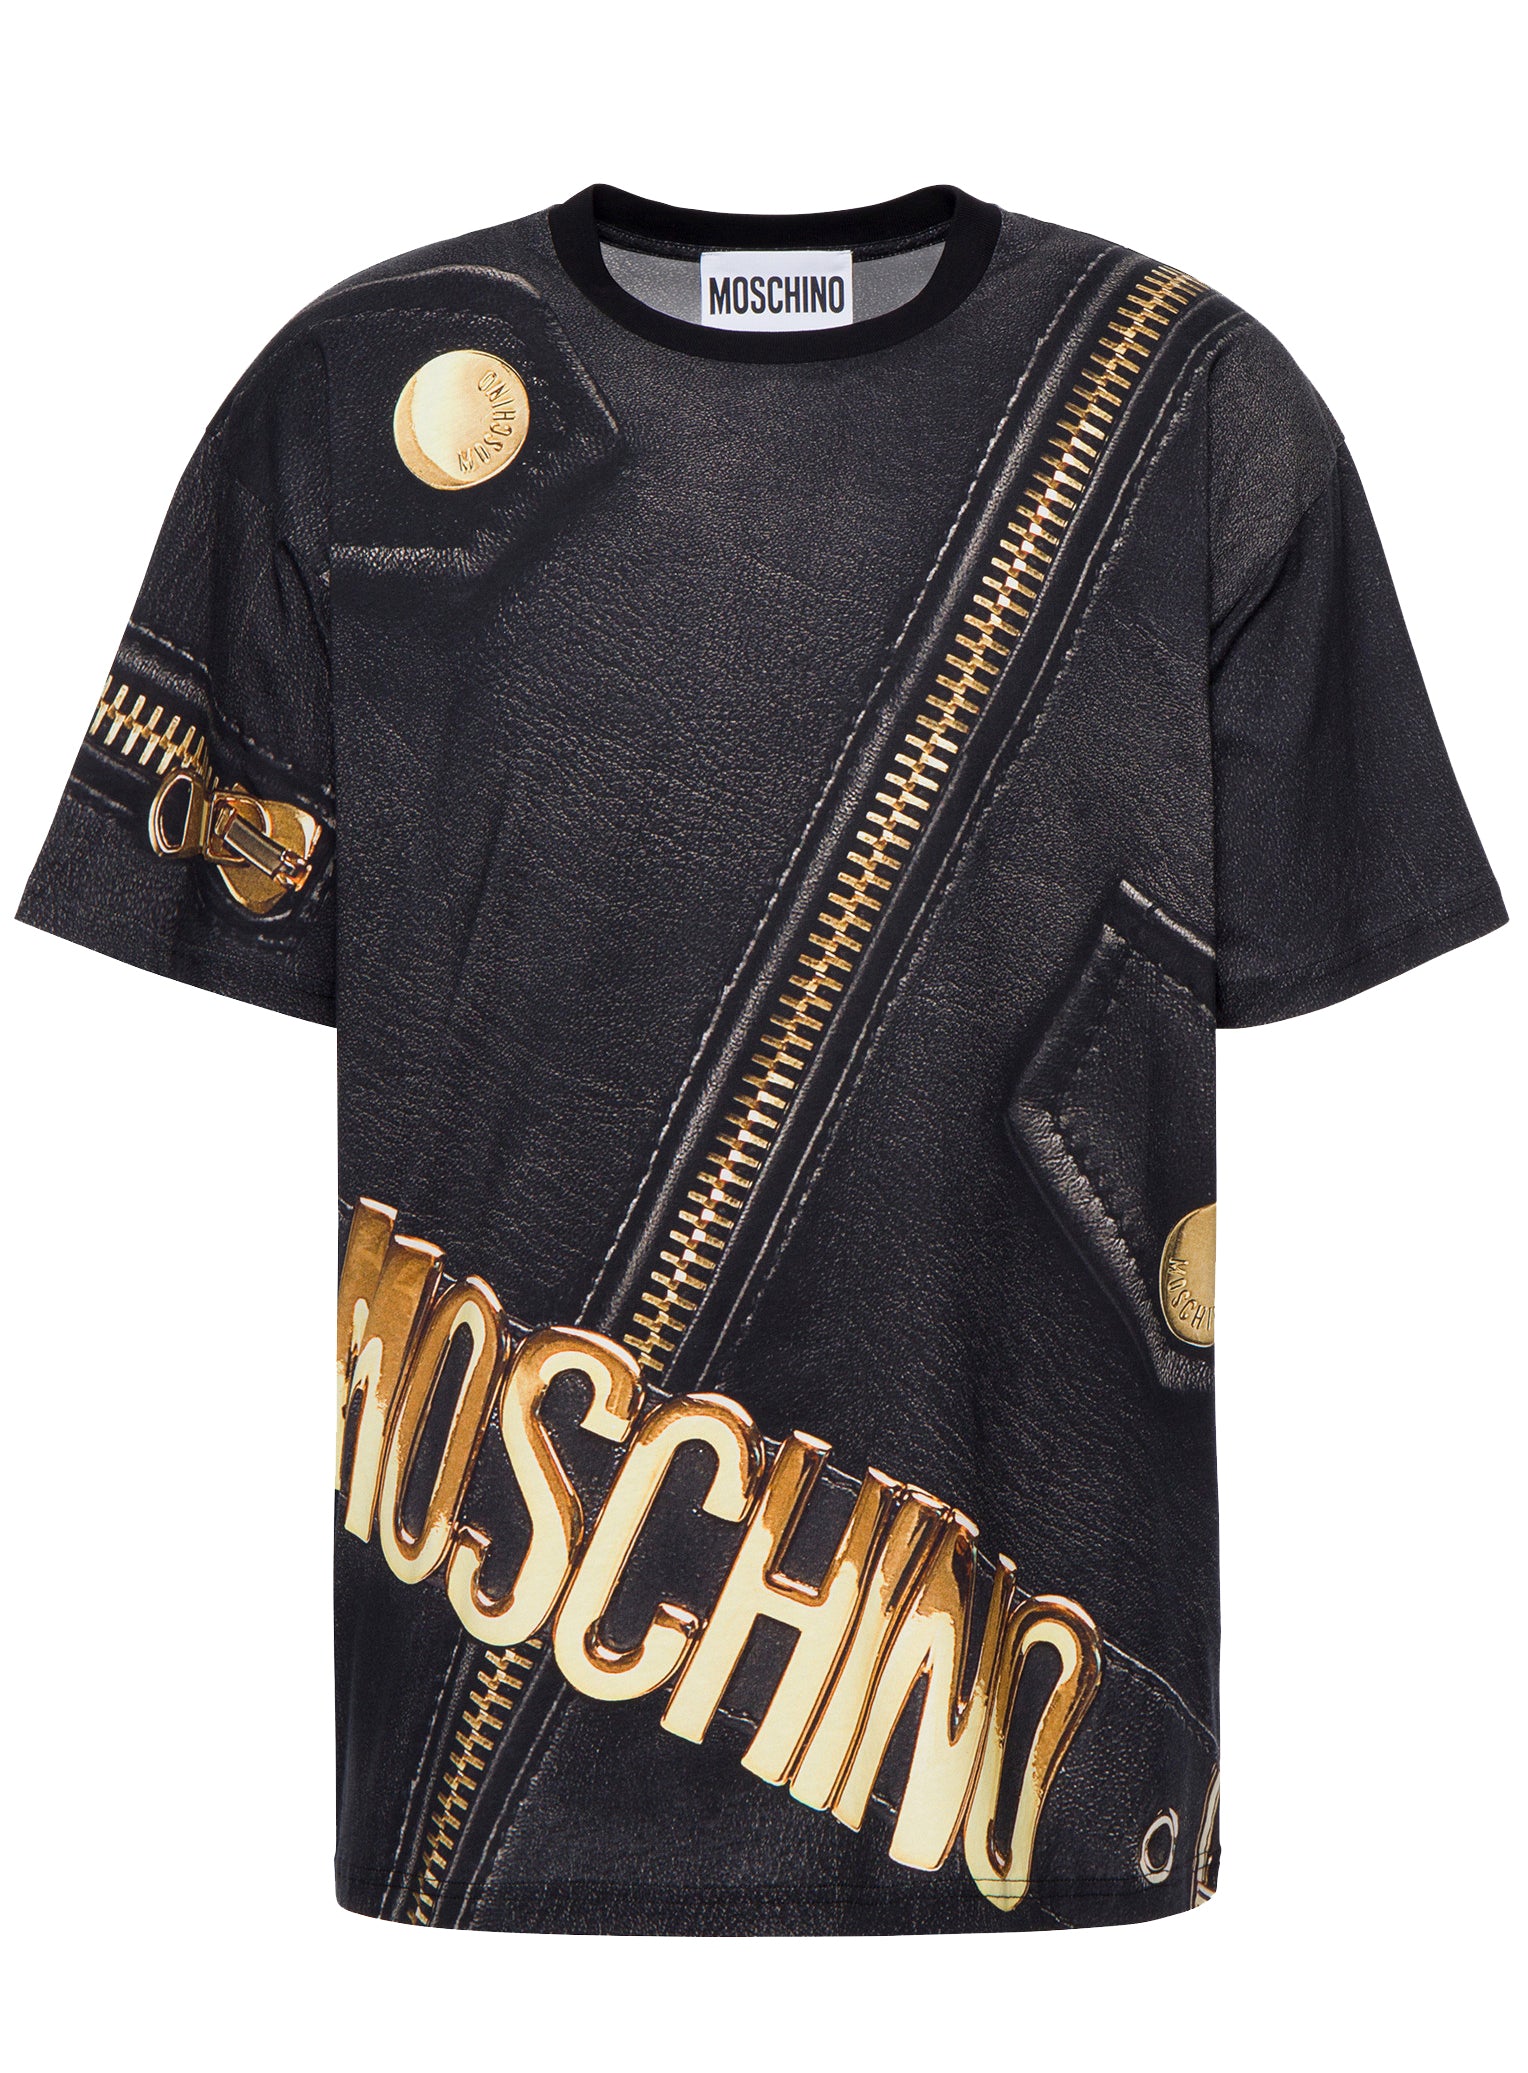 Moschino Leather Logo Tee Shirt